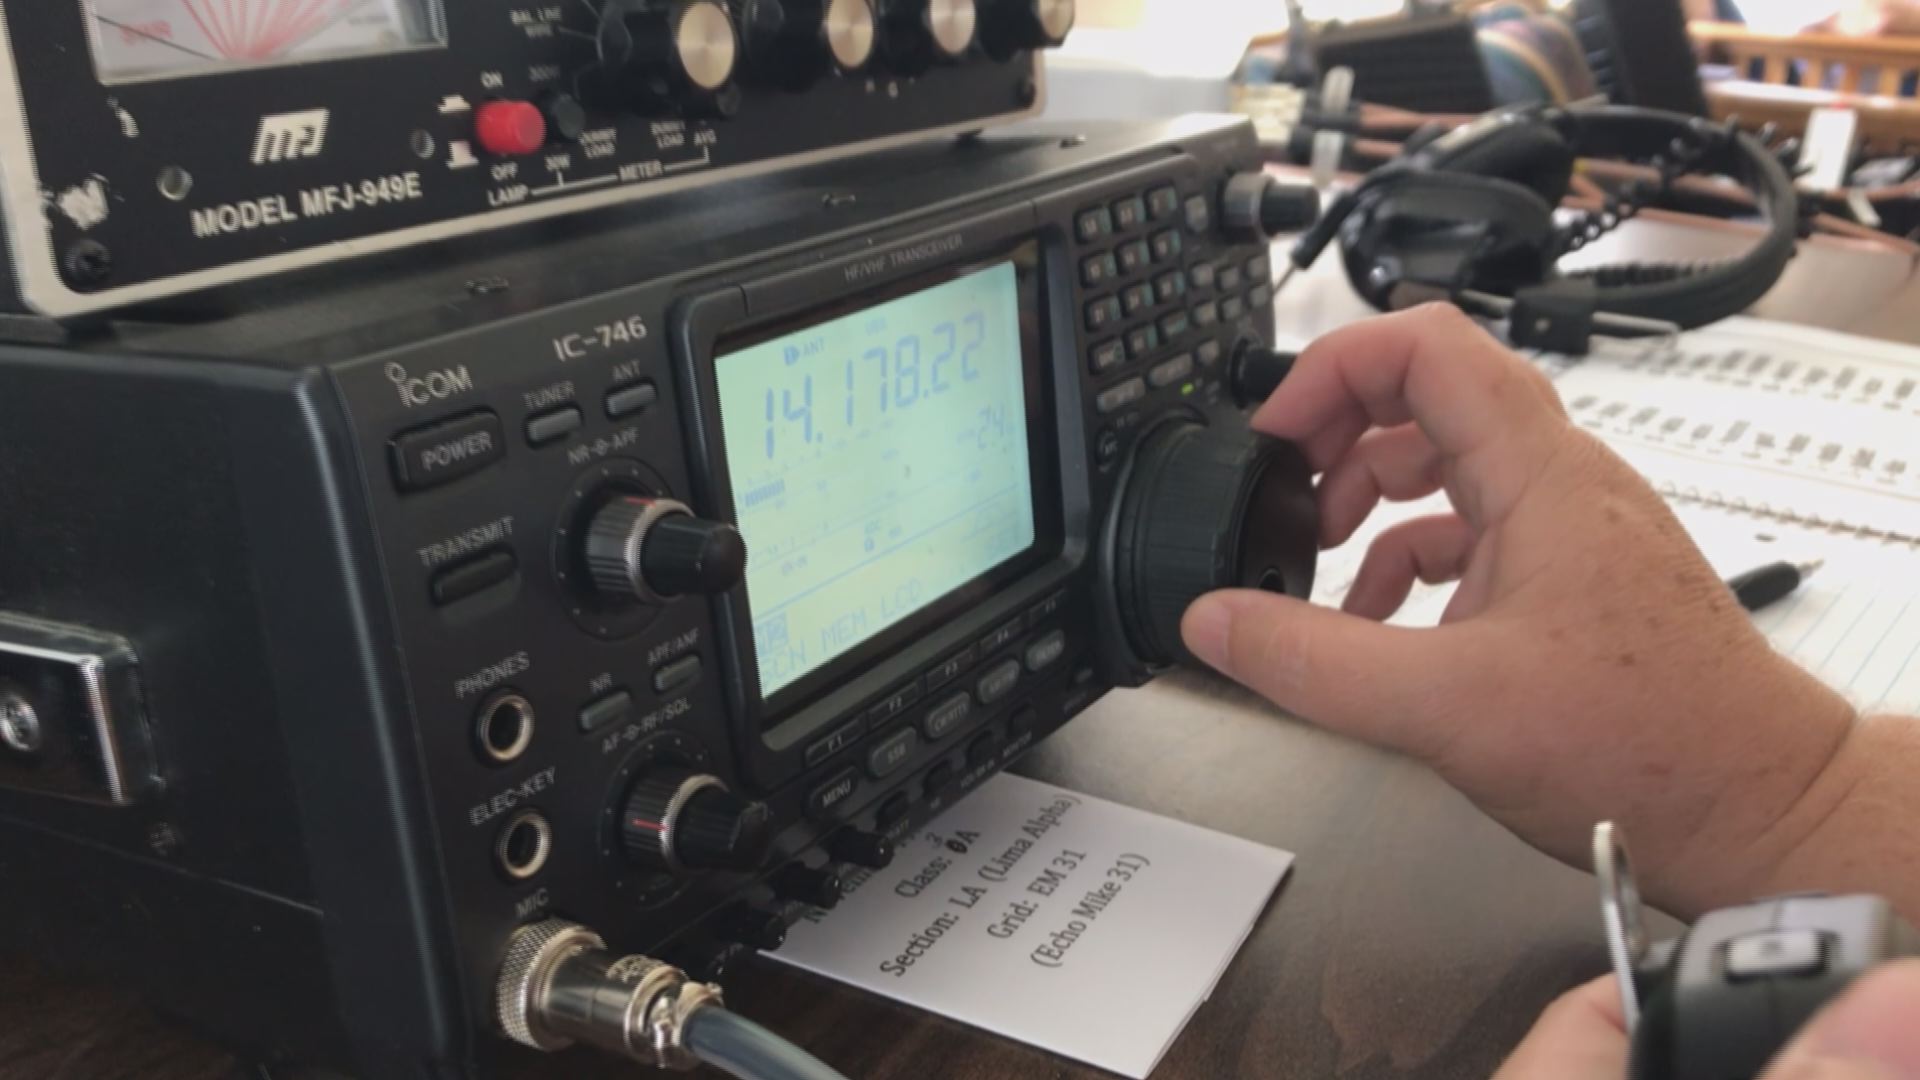 Amateur radio operators brush up on disaster scenarios in Central Louisiana